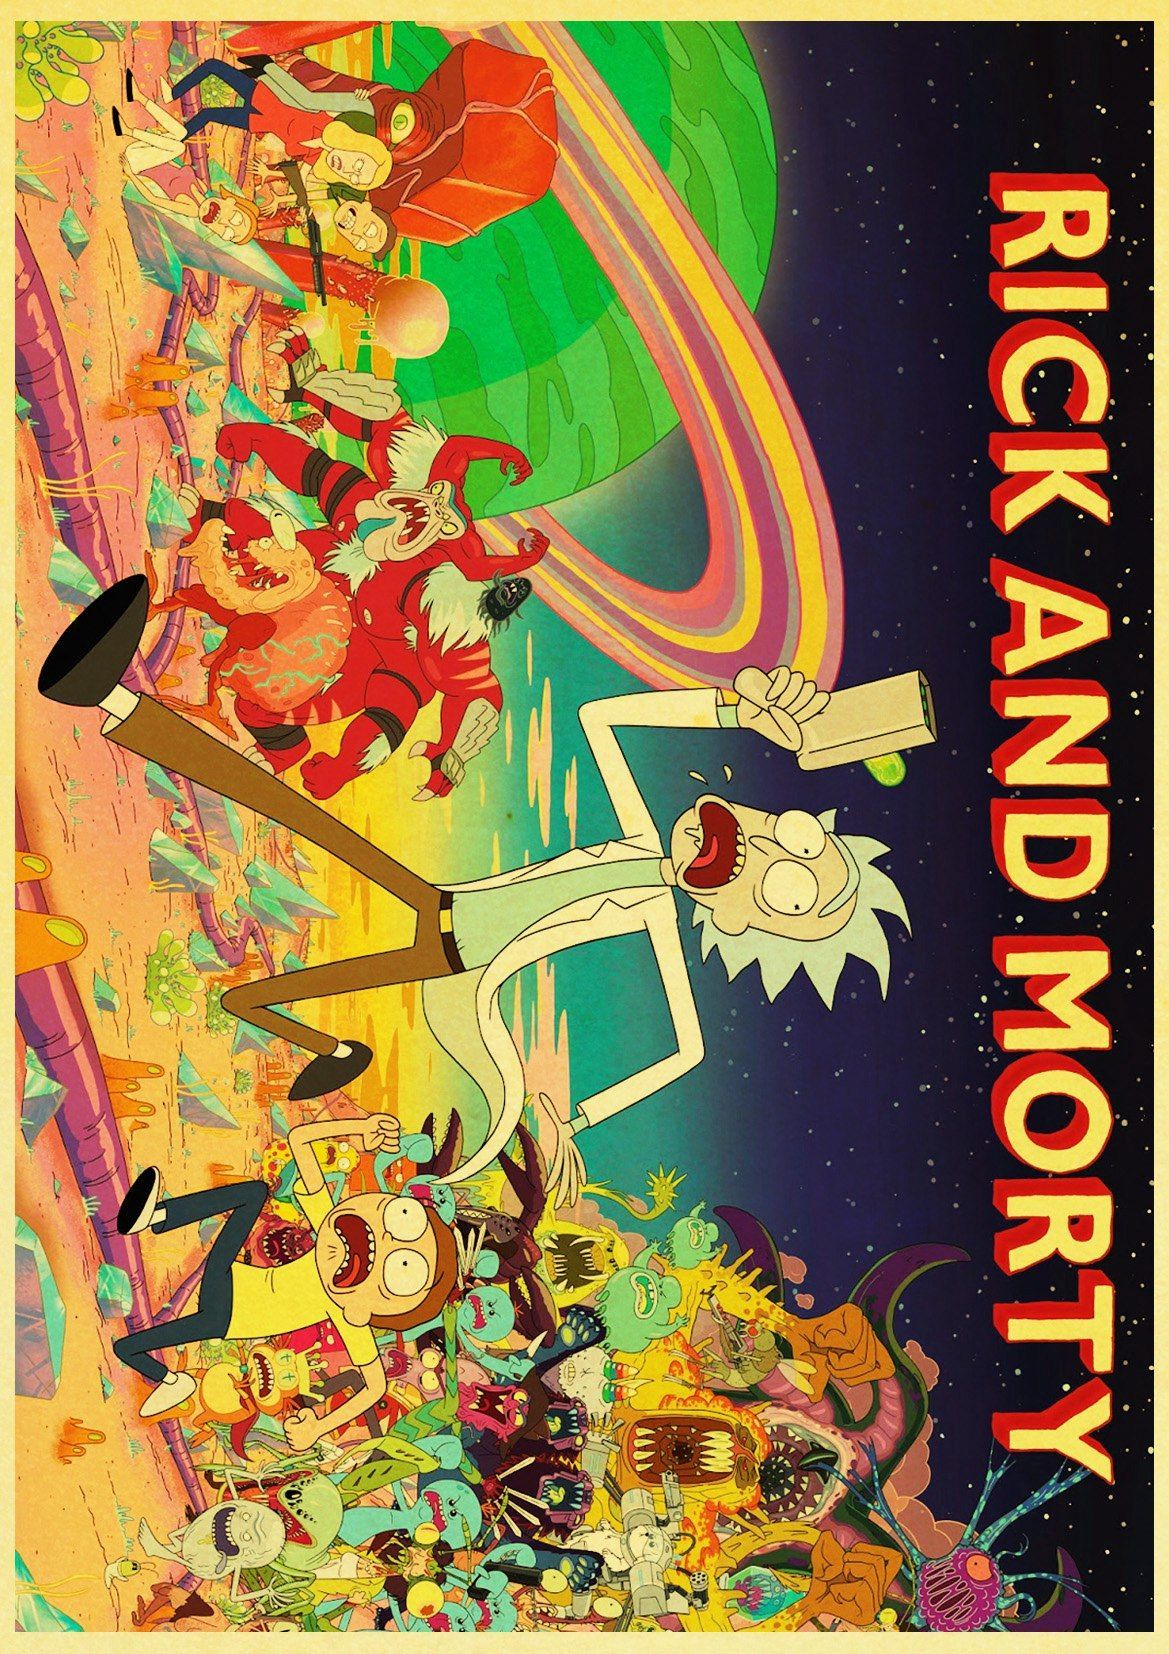 Rick And Morty Theme 2020 Retro Poster. Rick and morty, Dragon ball z